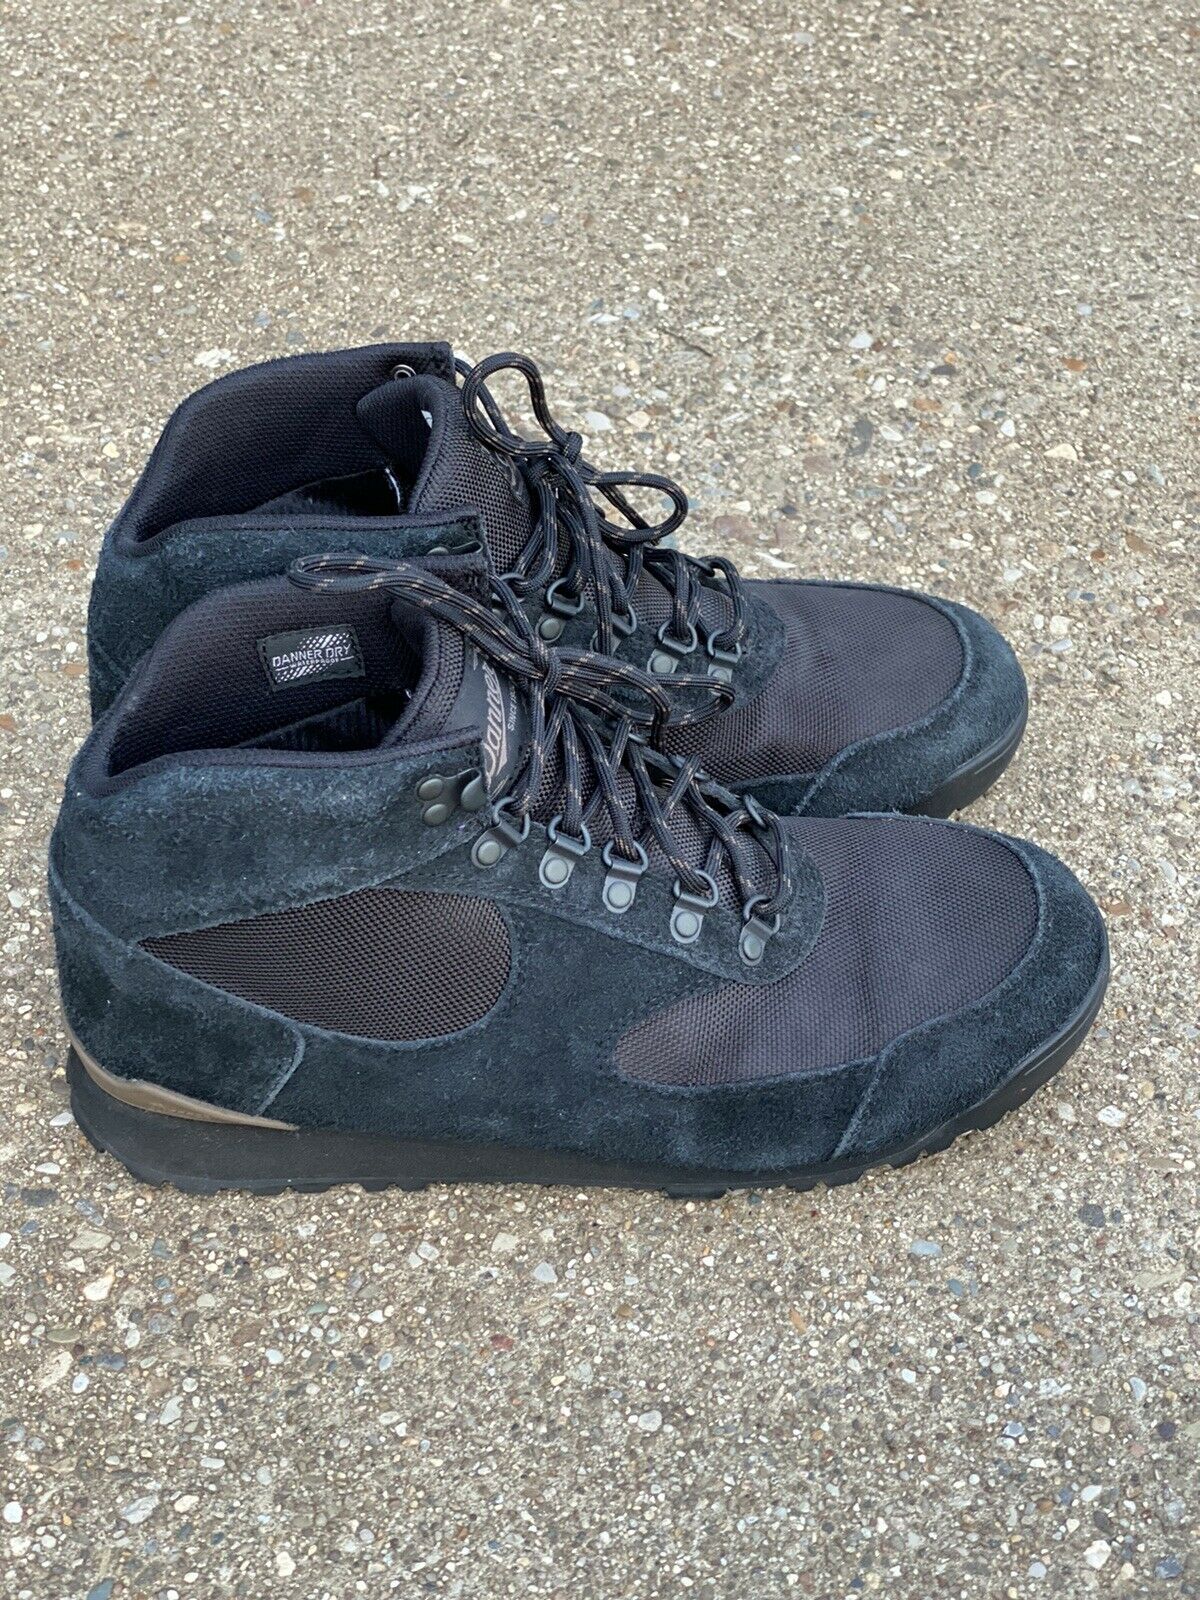 Danner Jag Hiker Boots Carbon Black Shoe size 10 D Men’s Hiking